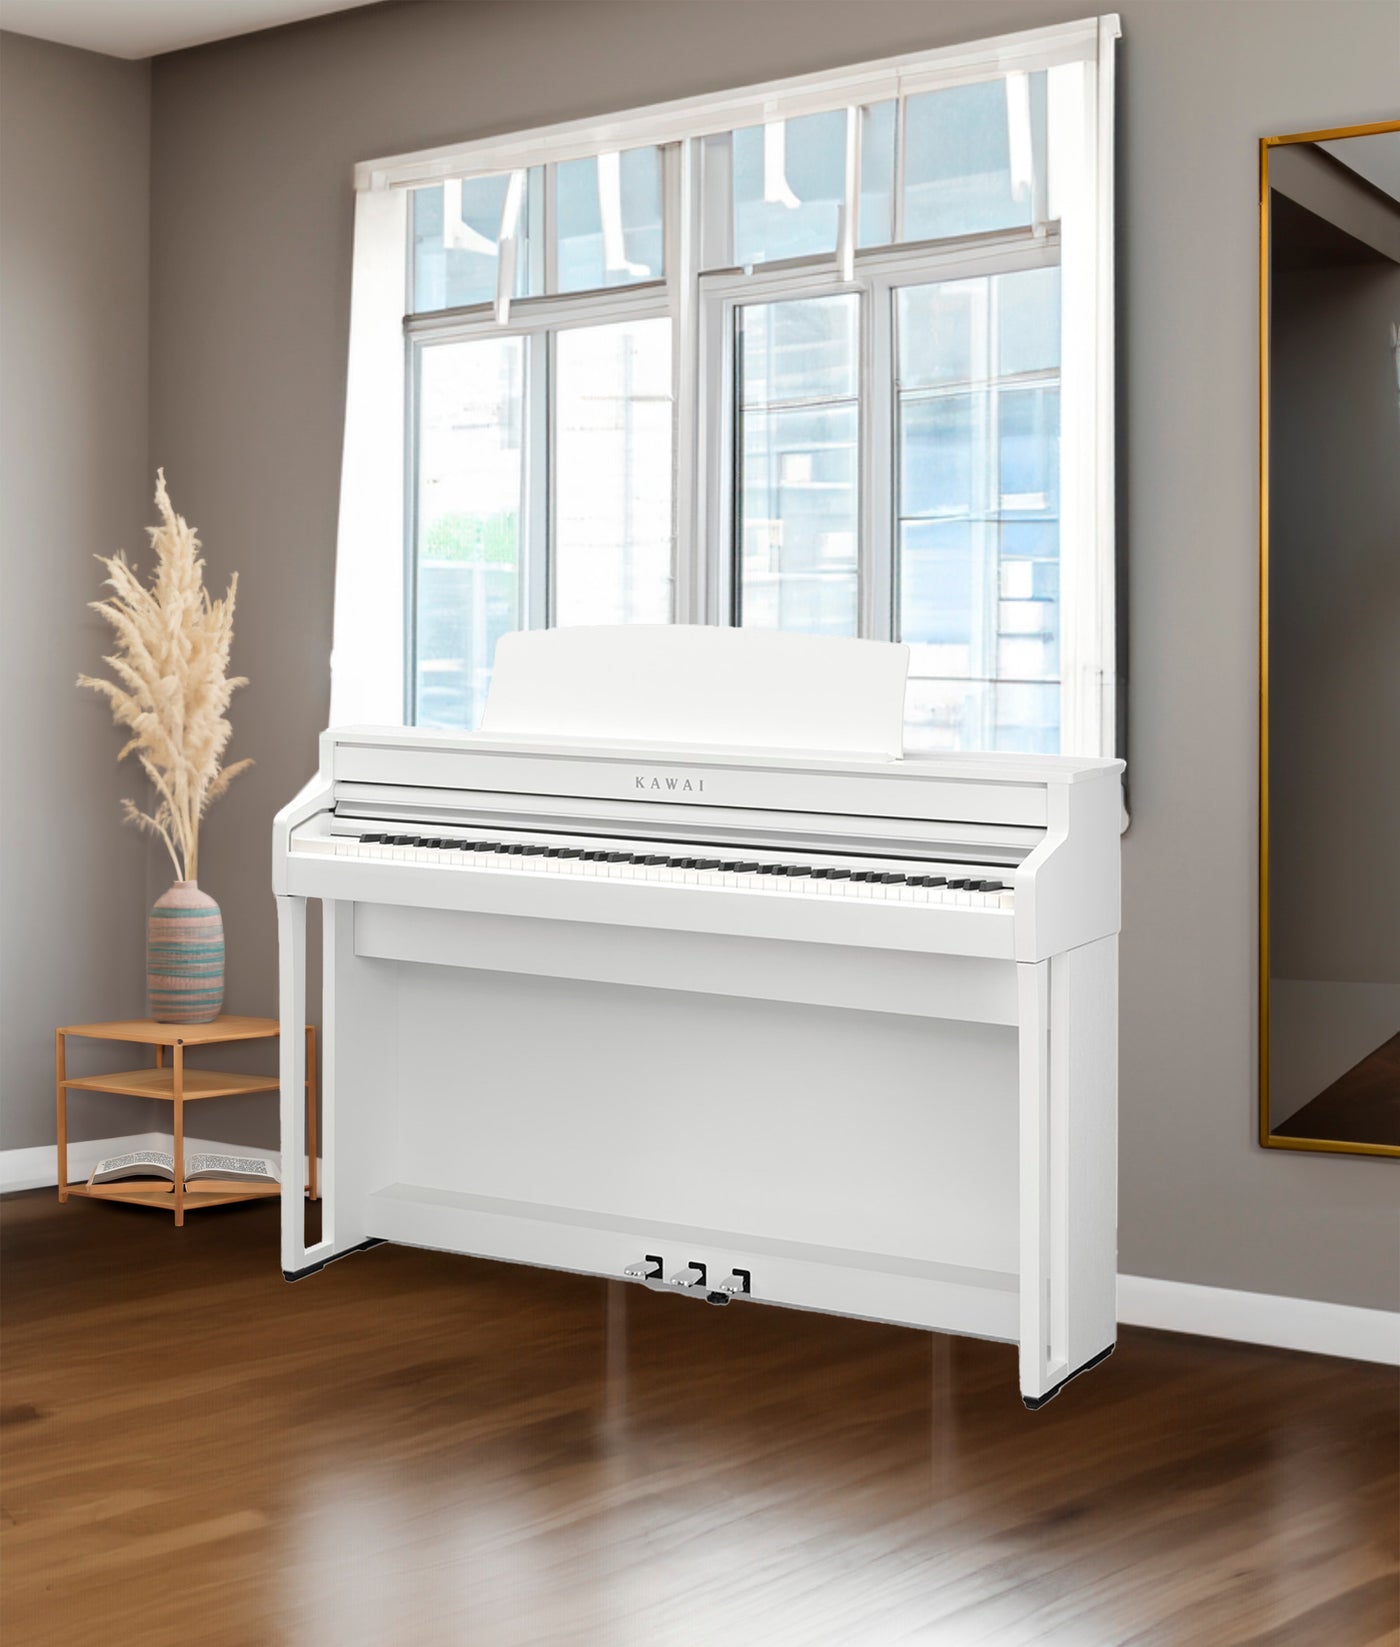 Kawai CA59 Satin White Digital Piano | New